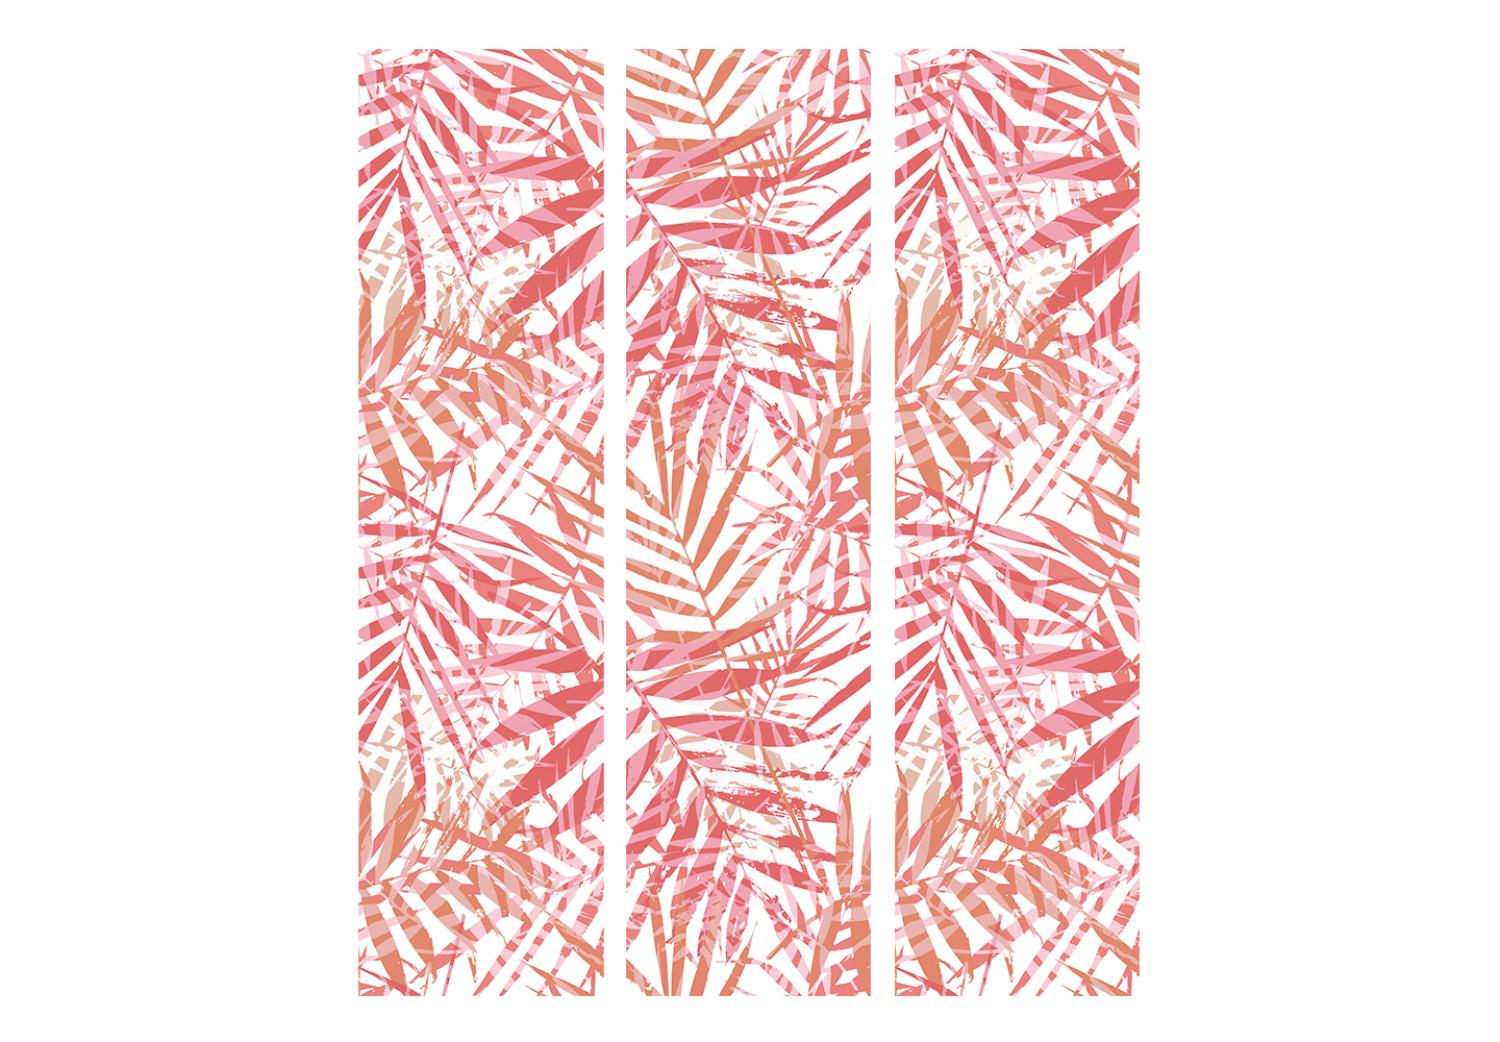 Biombo decorativo Palma roja - textura ligera de hojas de palma rojas sobre fondo blanco